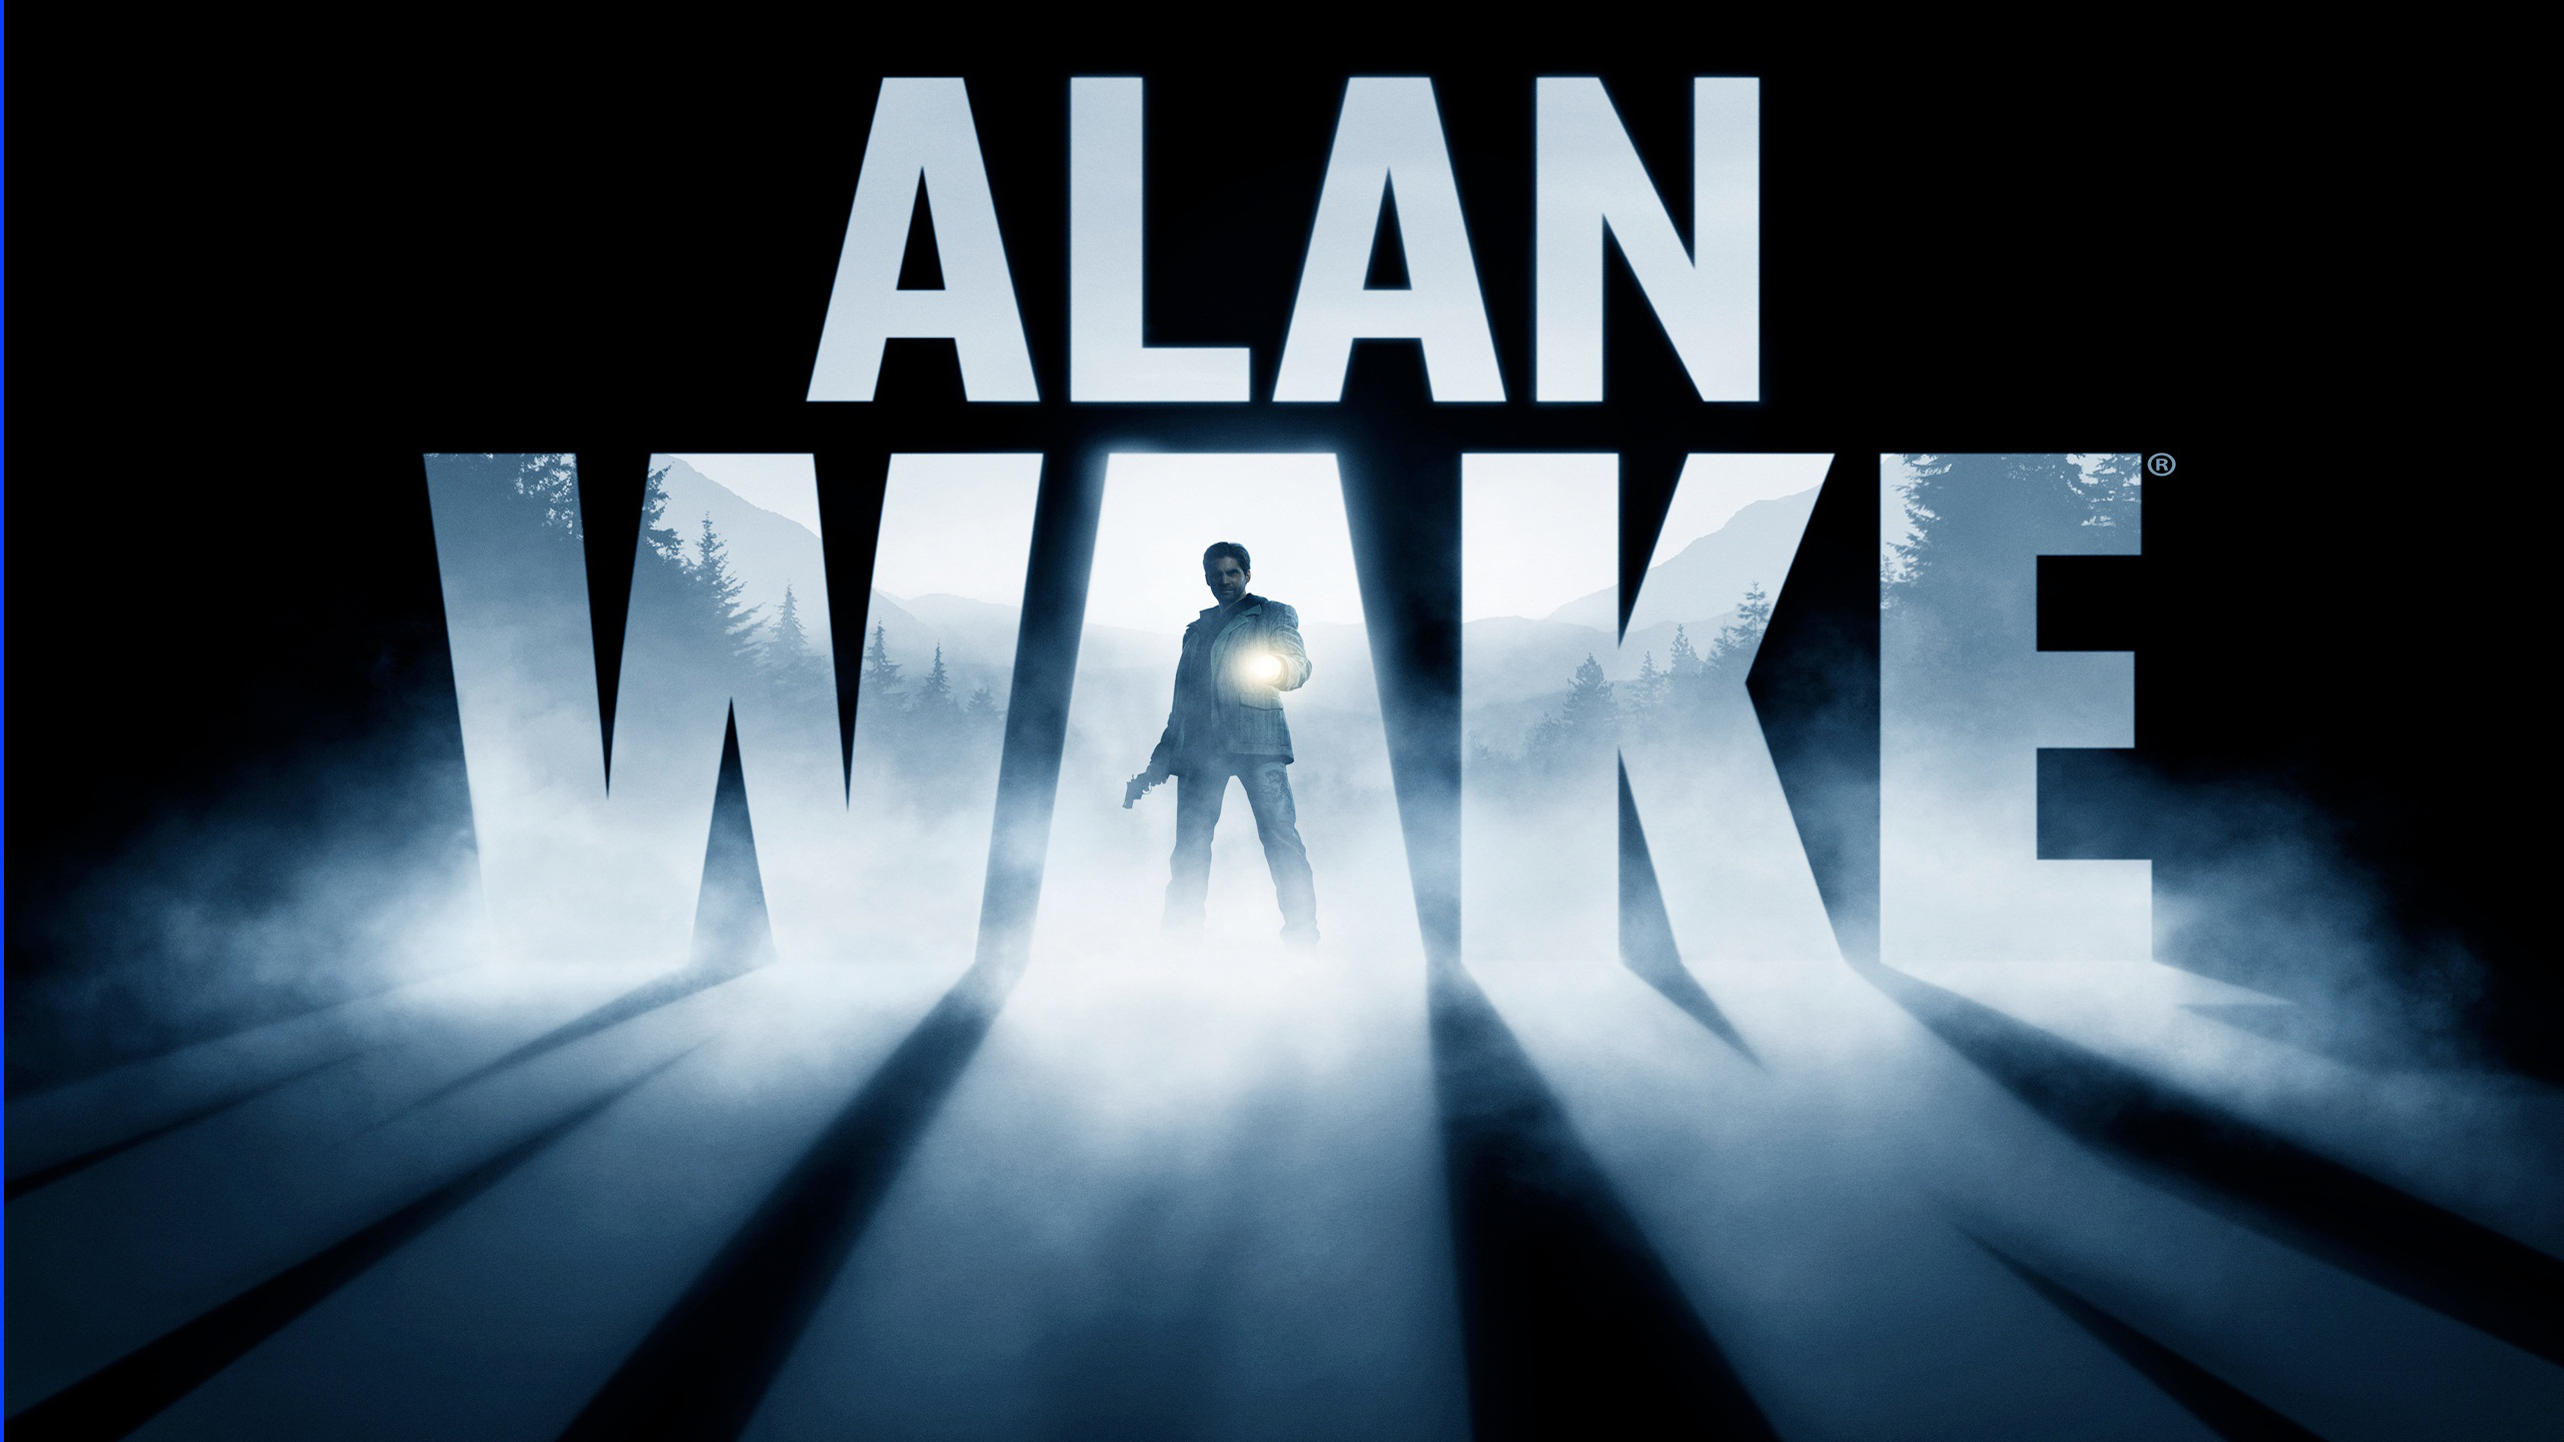 Alan Wake: The Signal - IGN